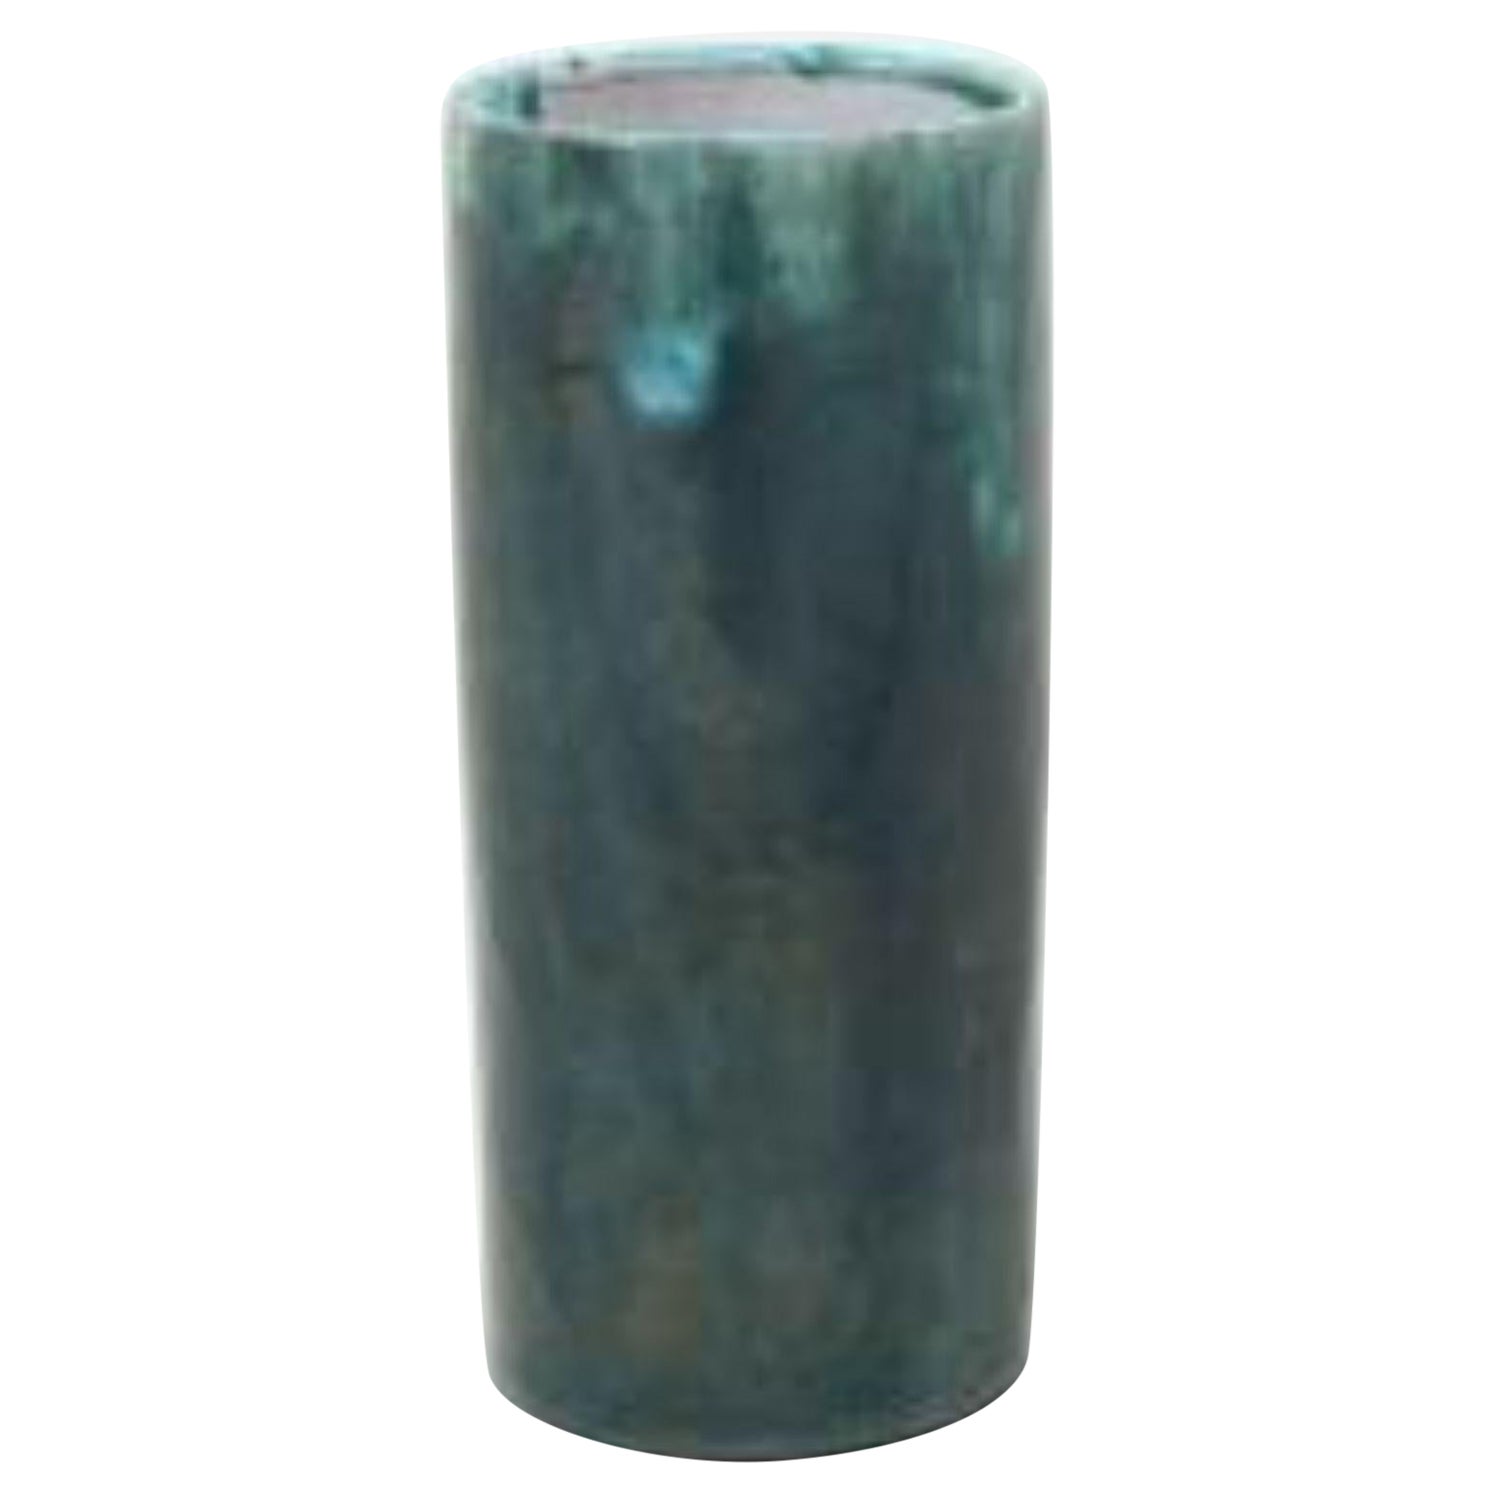 Vaso cilindrico da studio in ceramica smaltata verde, Biot, Francia, 1950 ca.